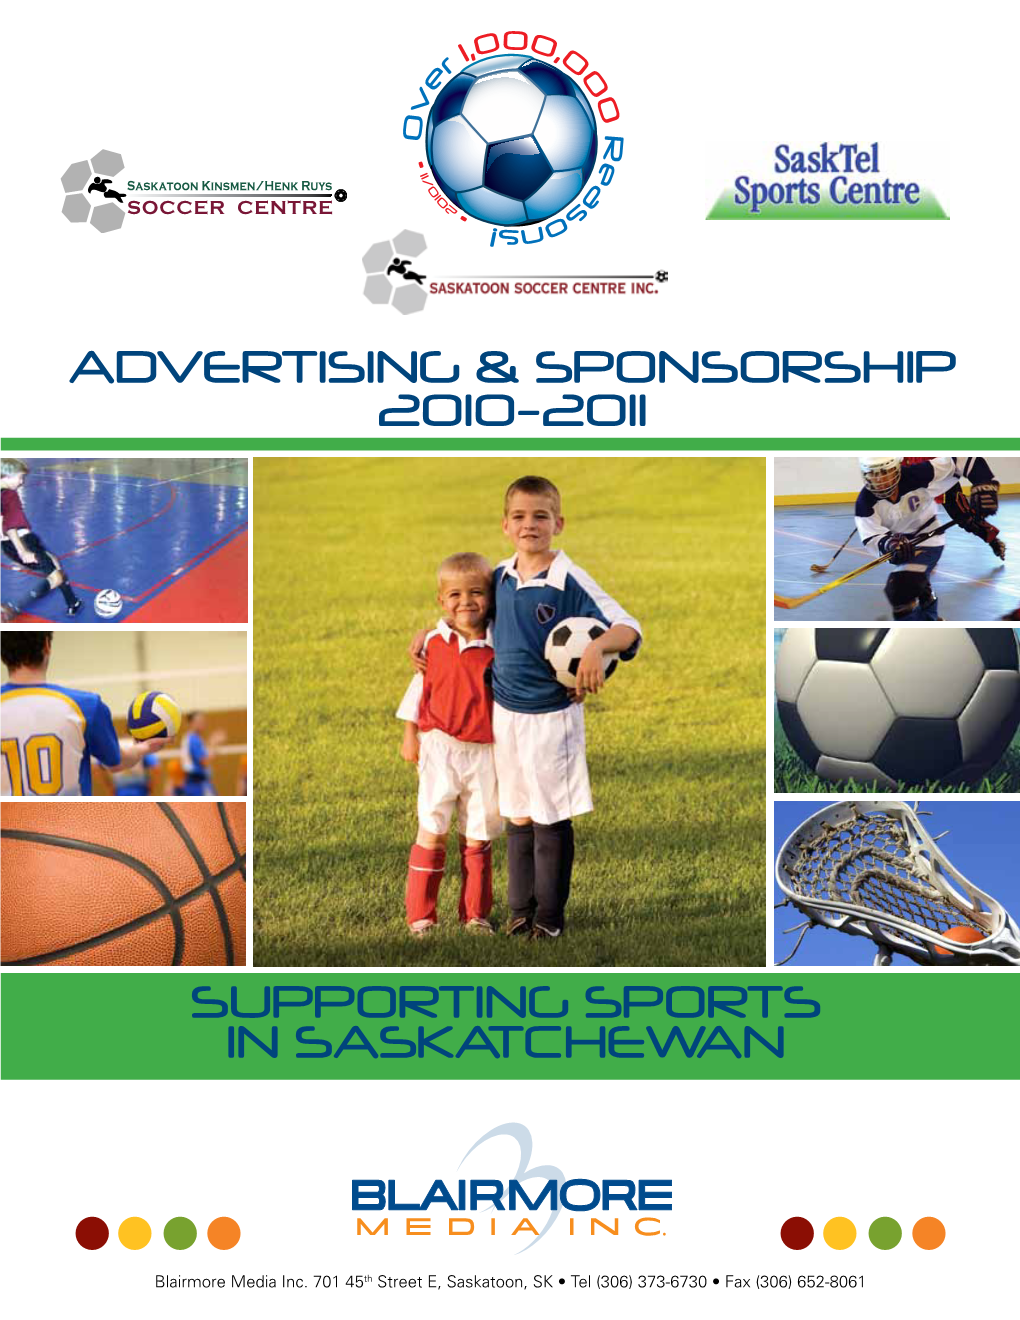 Advertising & Sponsorship 2010-2011 Supporting Sports